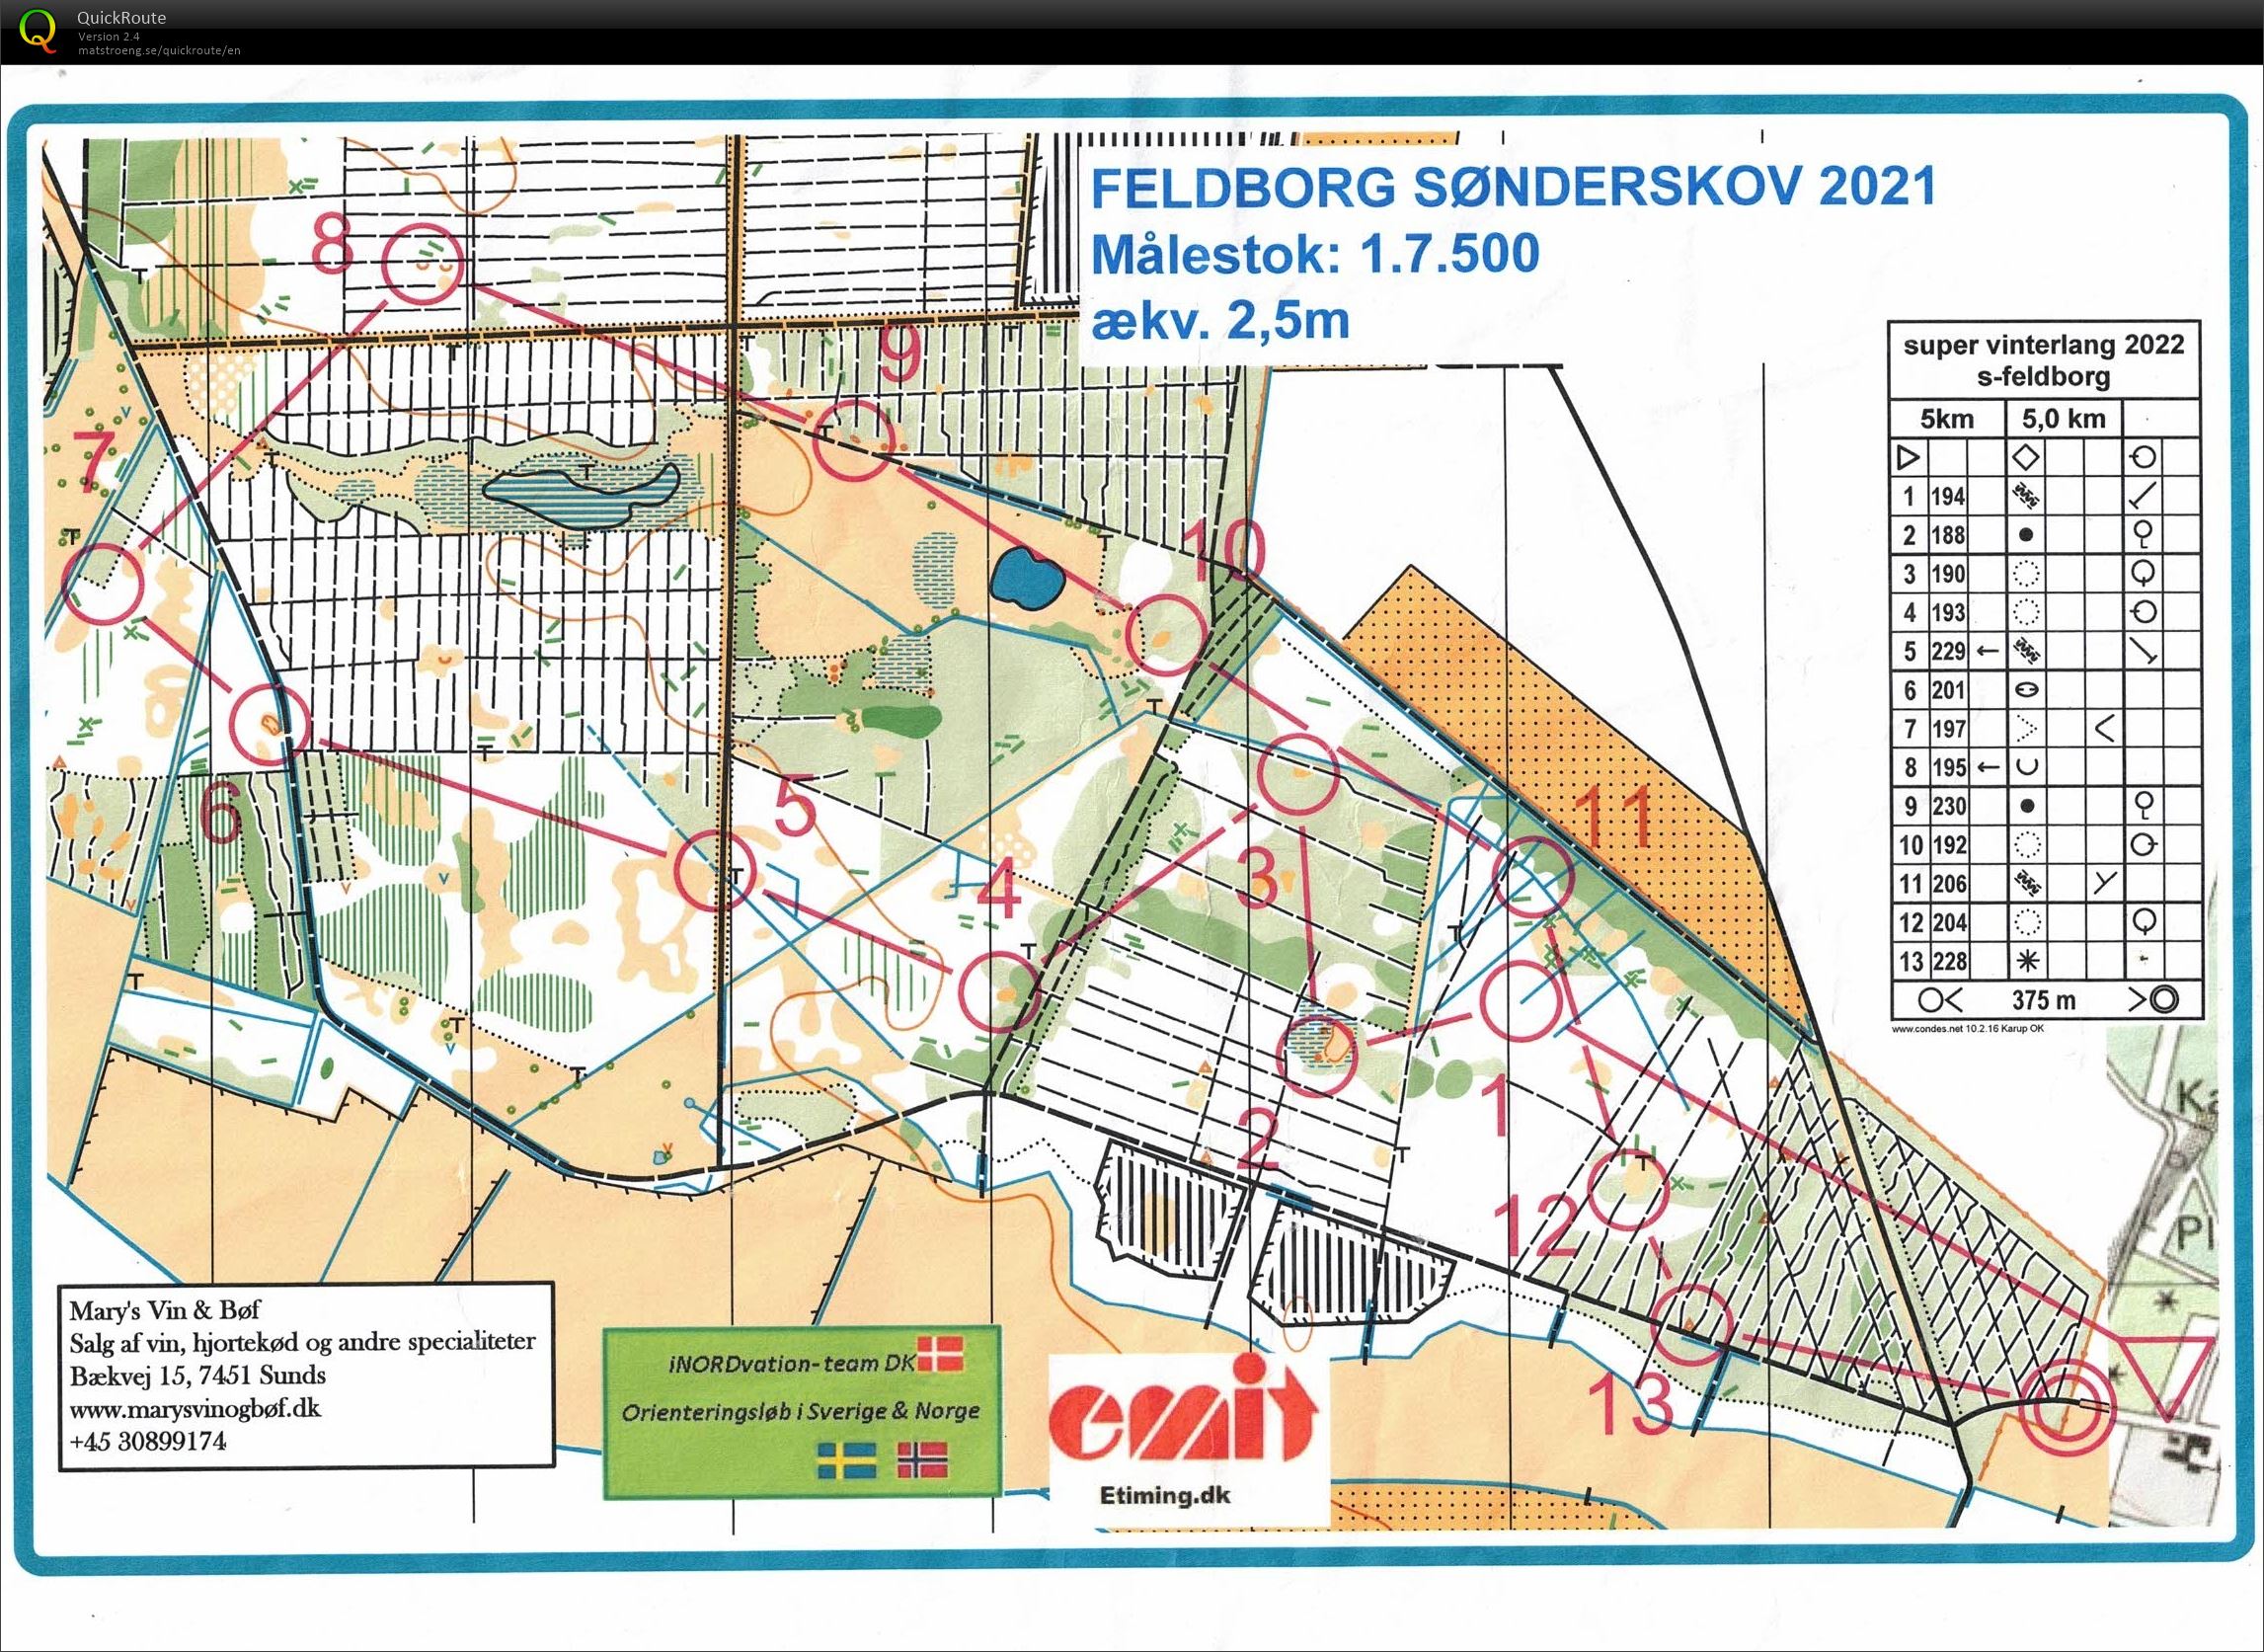 Feldborg Sønderskov, Super Langdistance 2, Bane 5 km, Pia Gade, 020122 (2022-01-02)